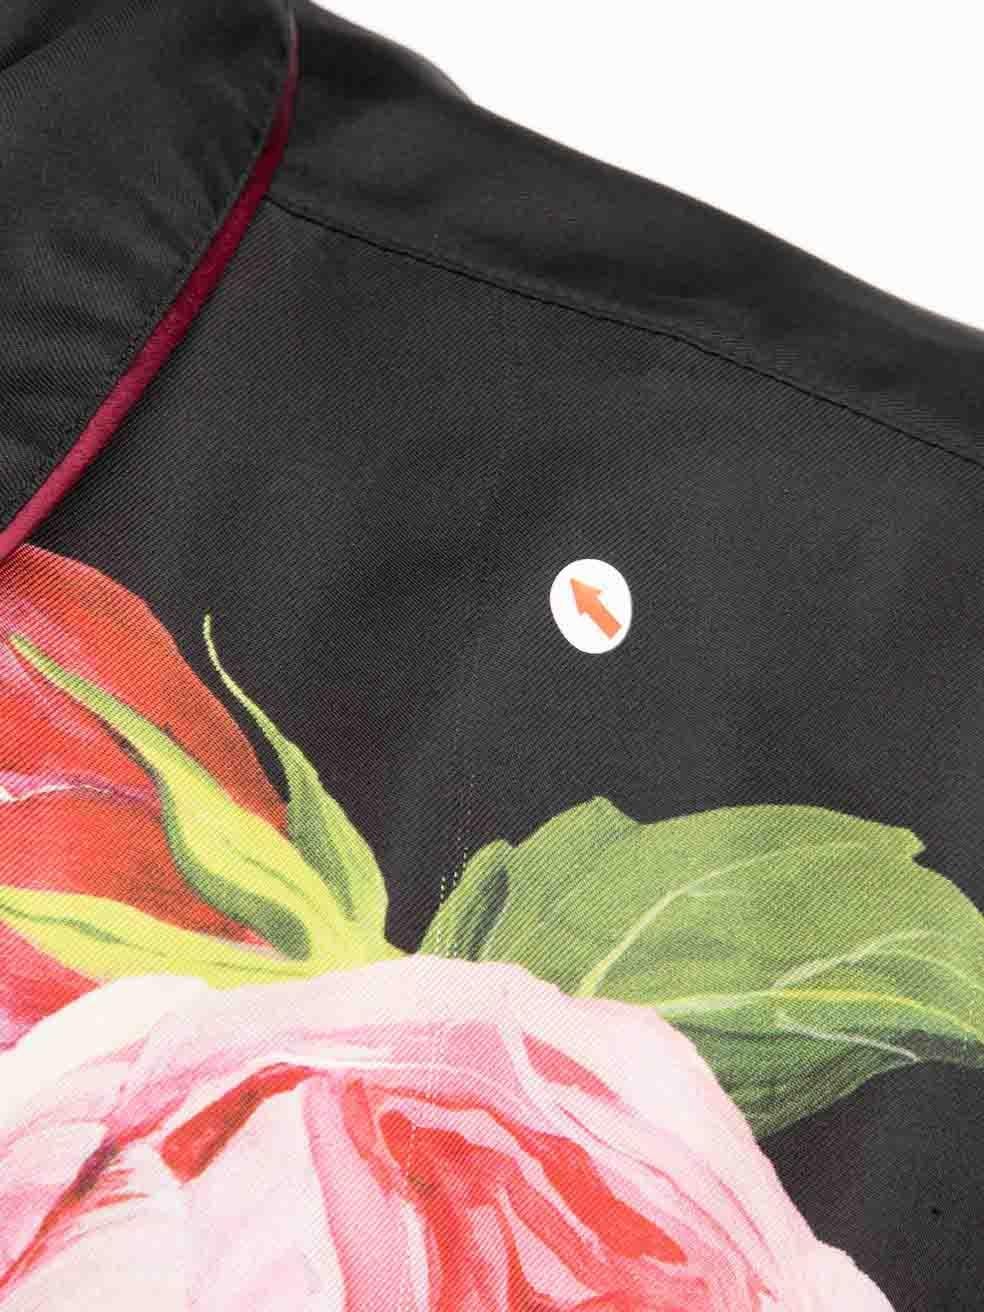 Dolce & Gabbana Black Silk Rose Print Shirt Size XXXL For Sale 4